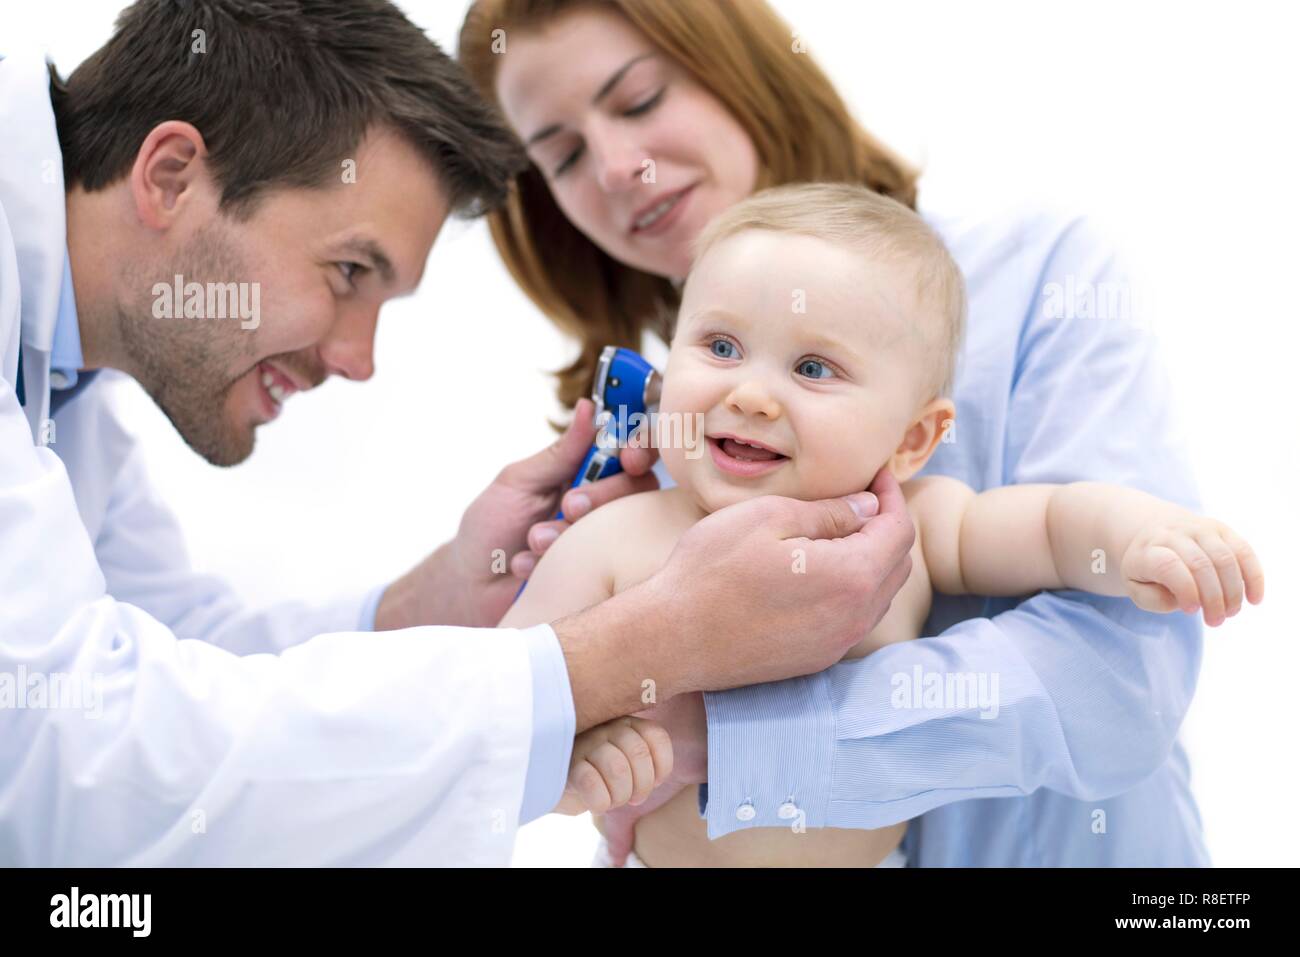 Doctor examining baby boy's ear with otoscope. Stock Photo